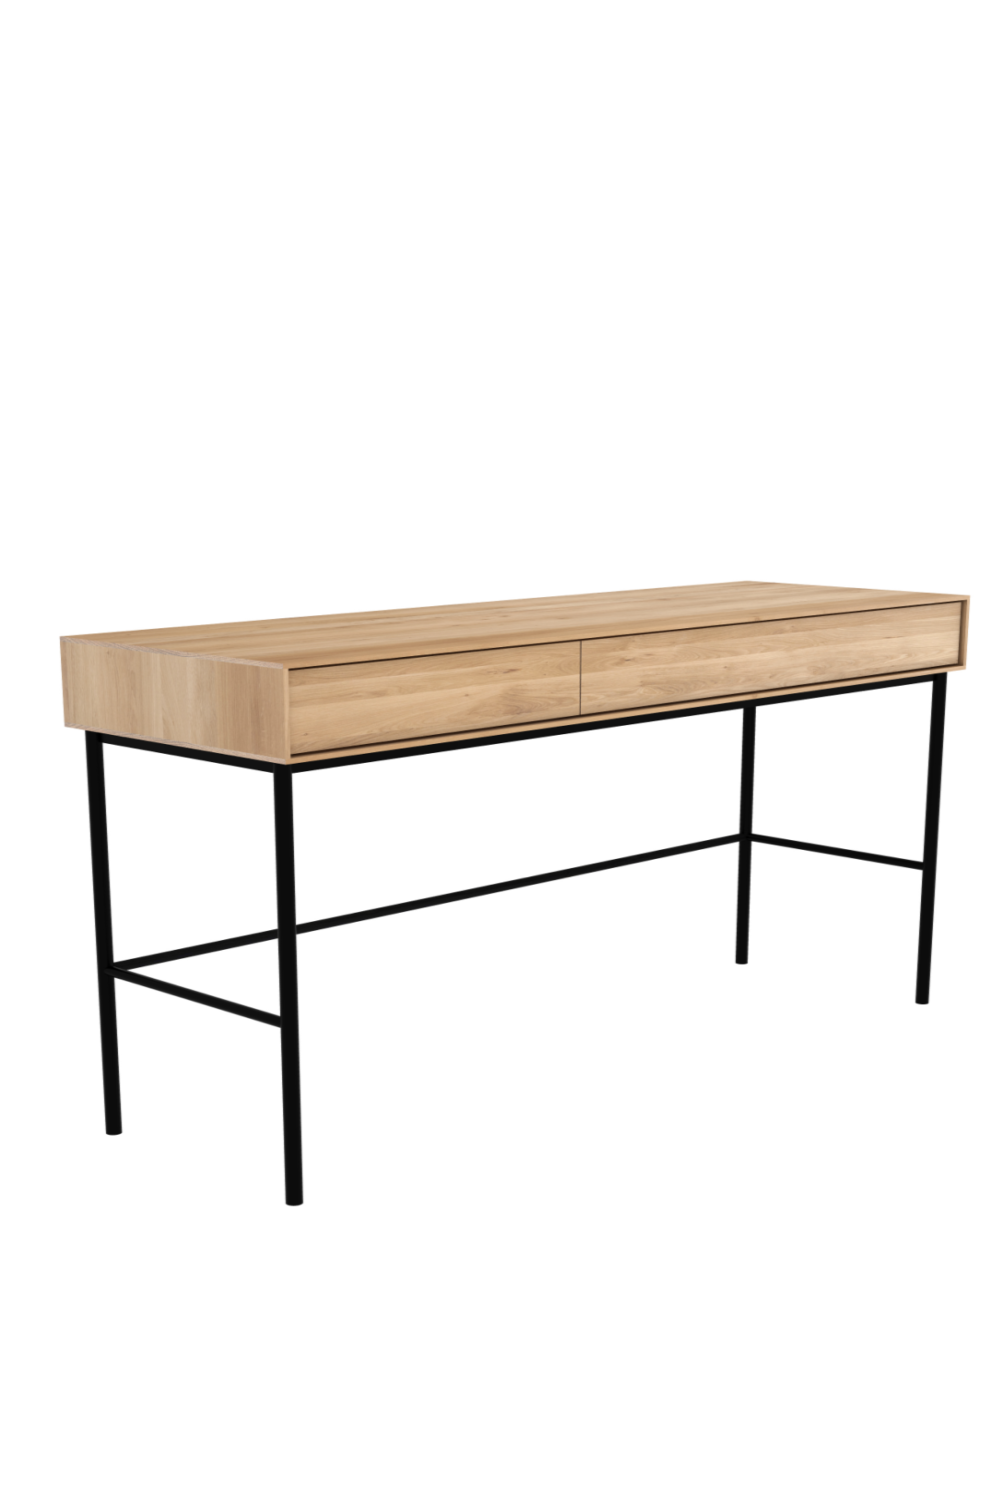 Oak Wood Desk With Drawers | Ethnicraft Whitebird | Woodfurniture.com